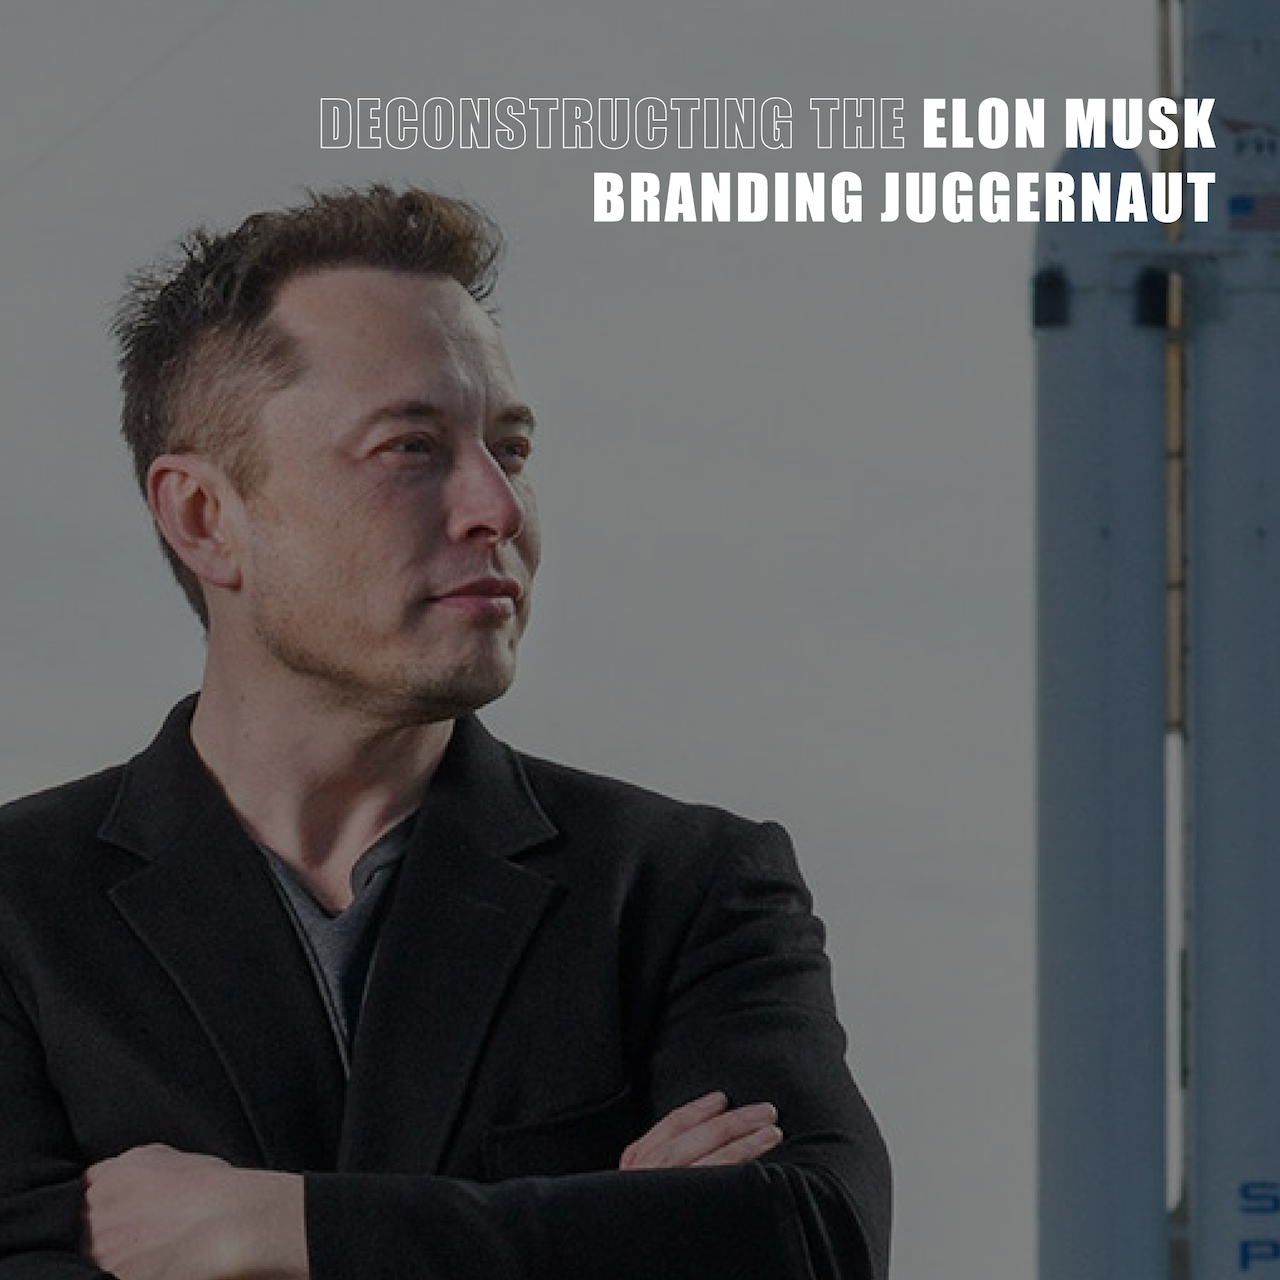 Three Lessons From Deconstructing the Elon Musk Branding Juggernaut